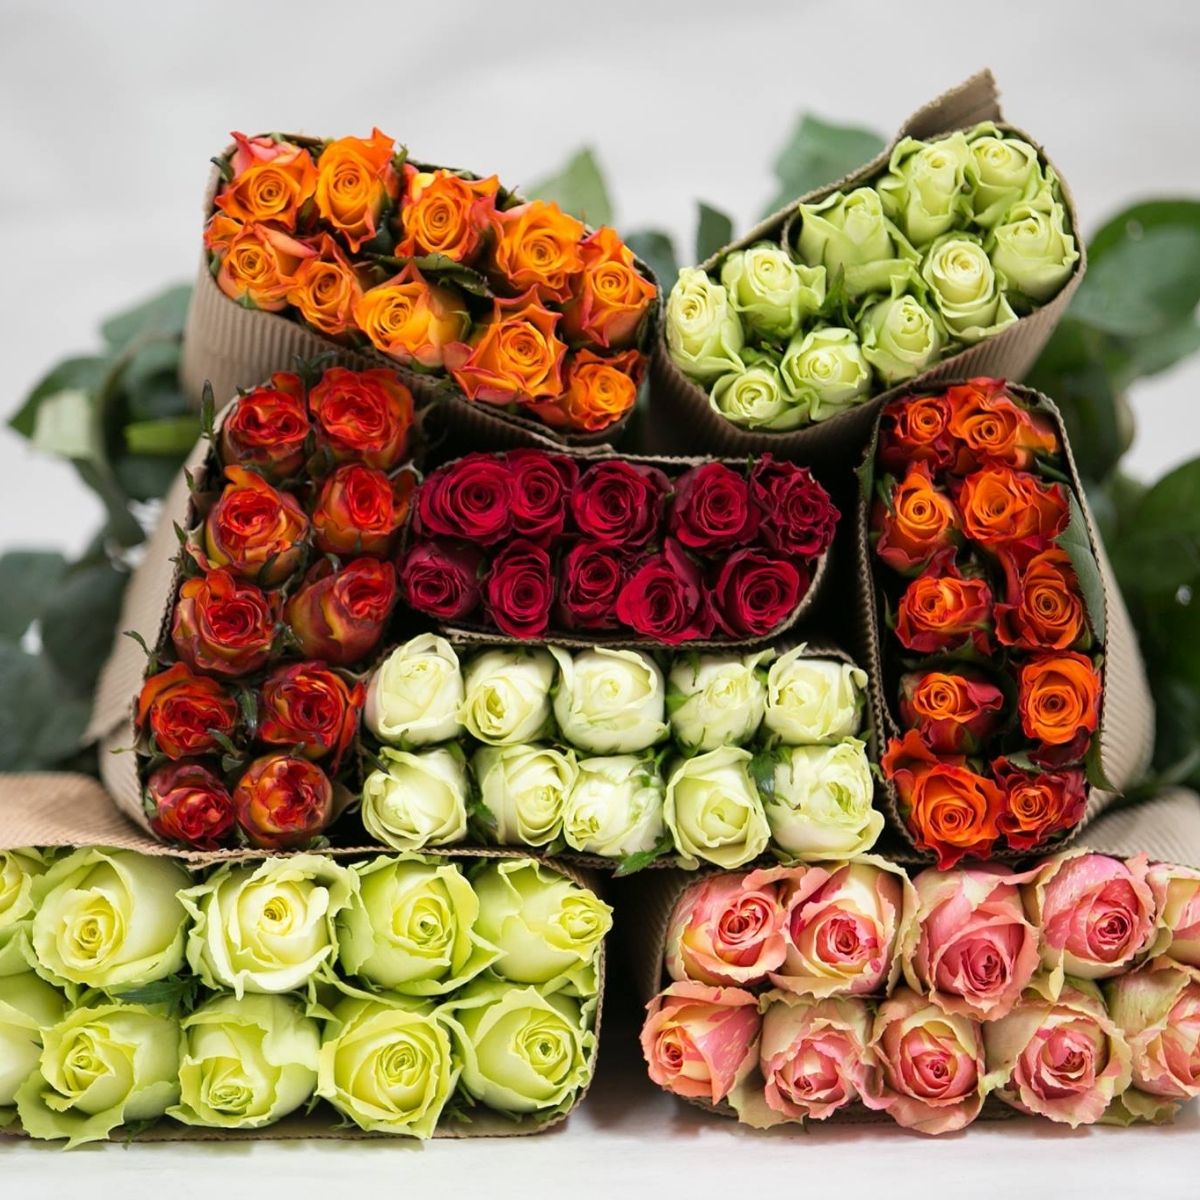 fontana-flowers-ltd-featured-photo-mixed-roses-on-thursd